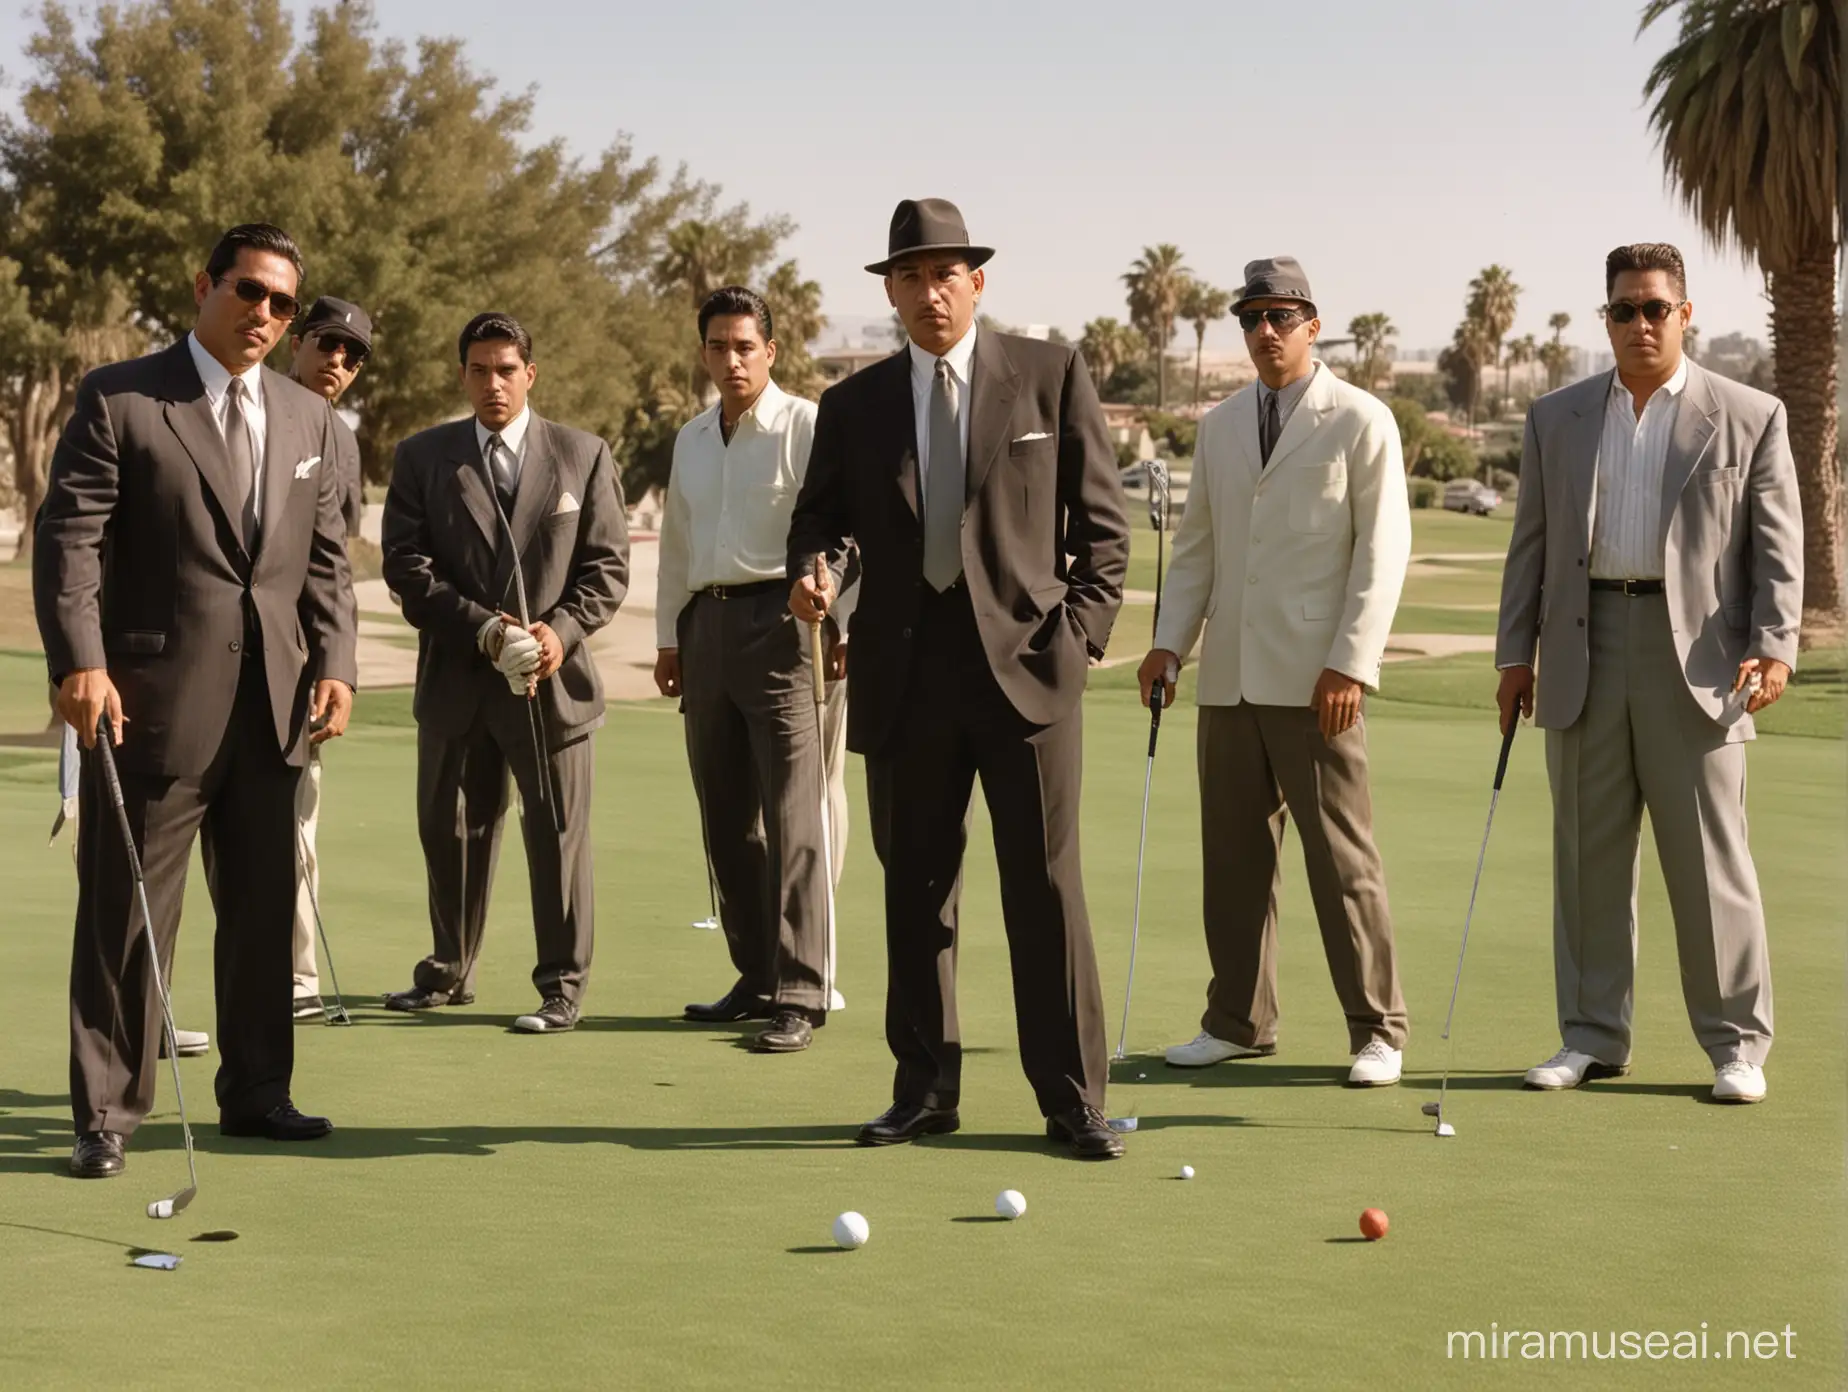 Stylish Hispanic Gangsters Enjoying Golf in 1990s Los Angeles